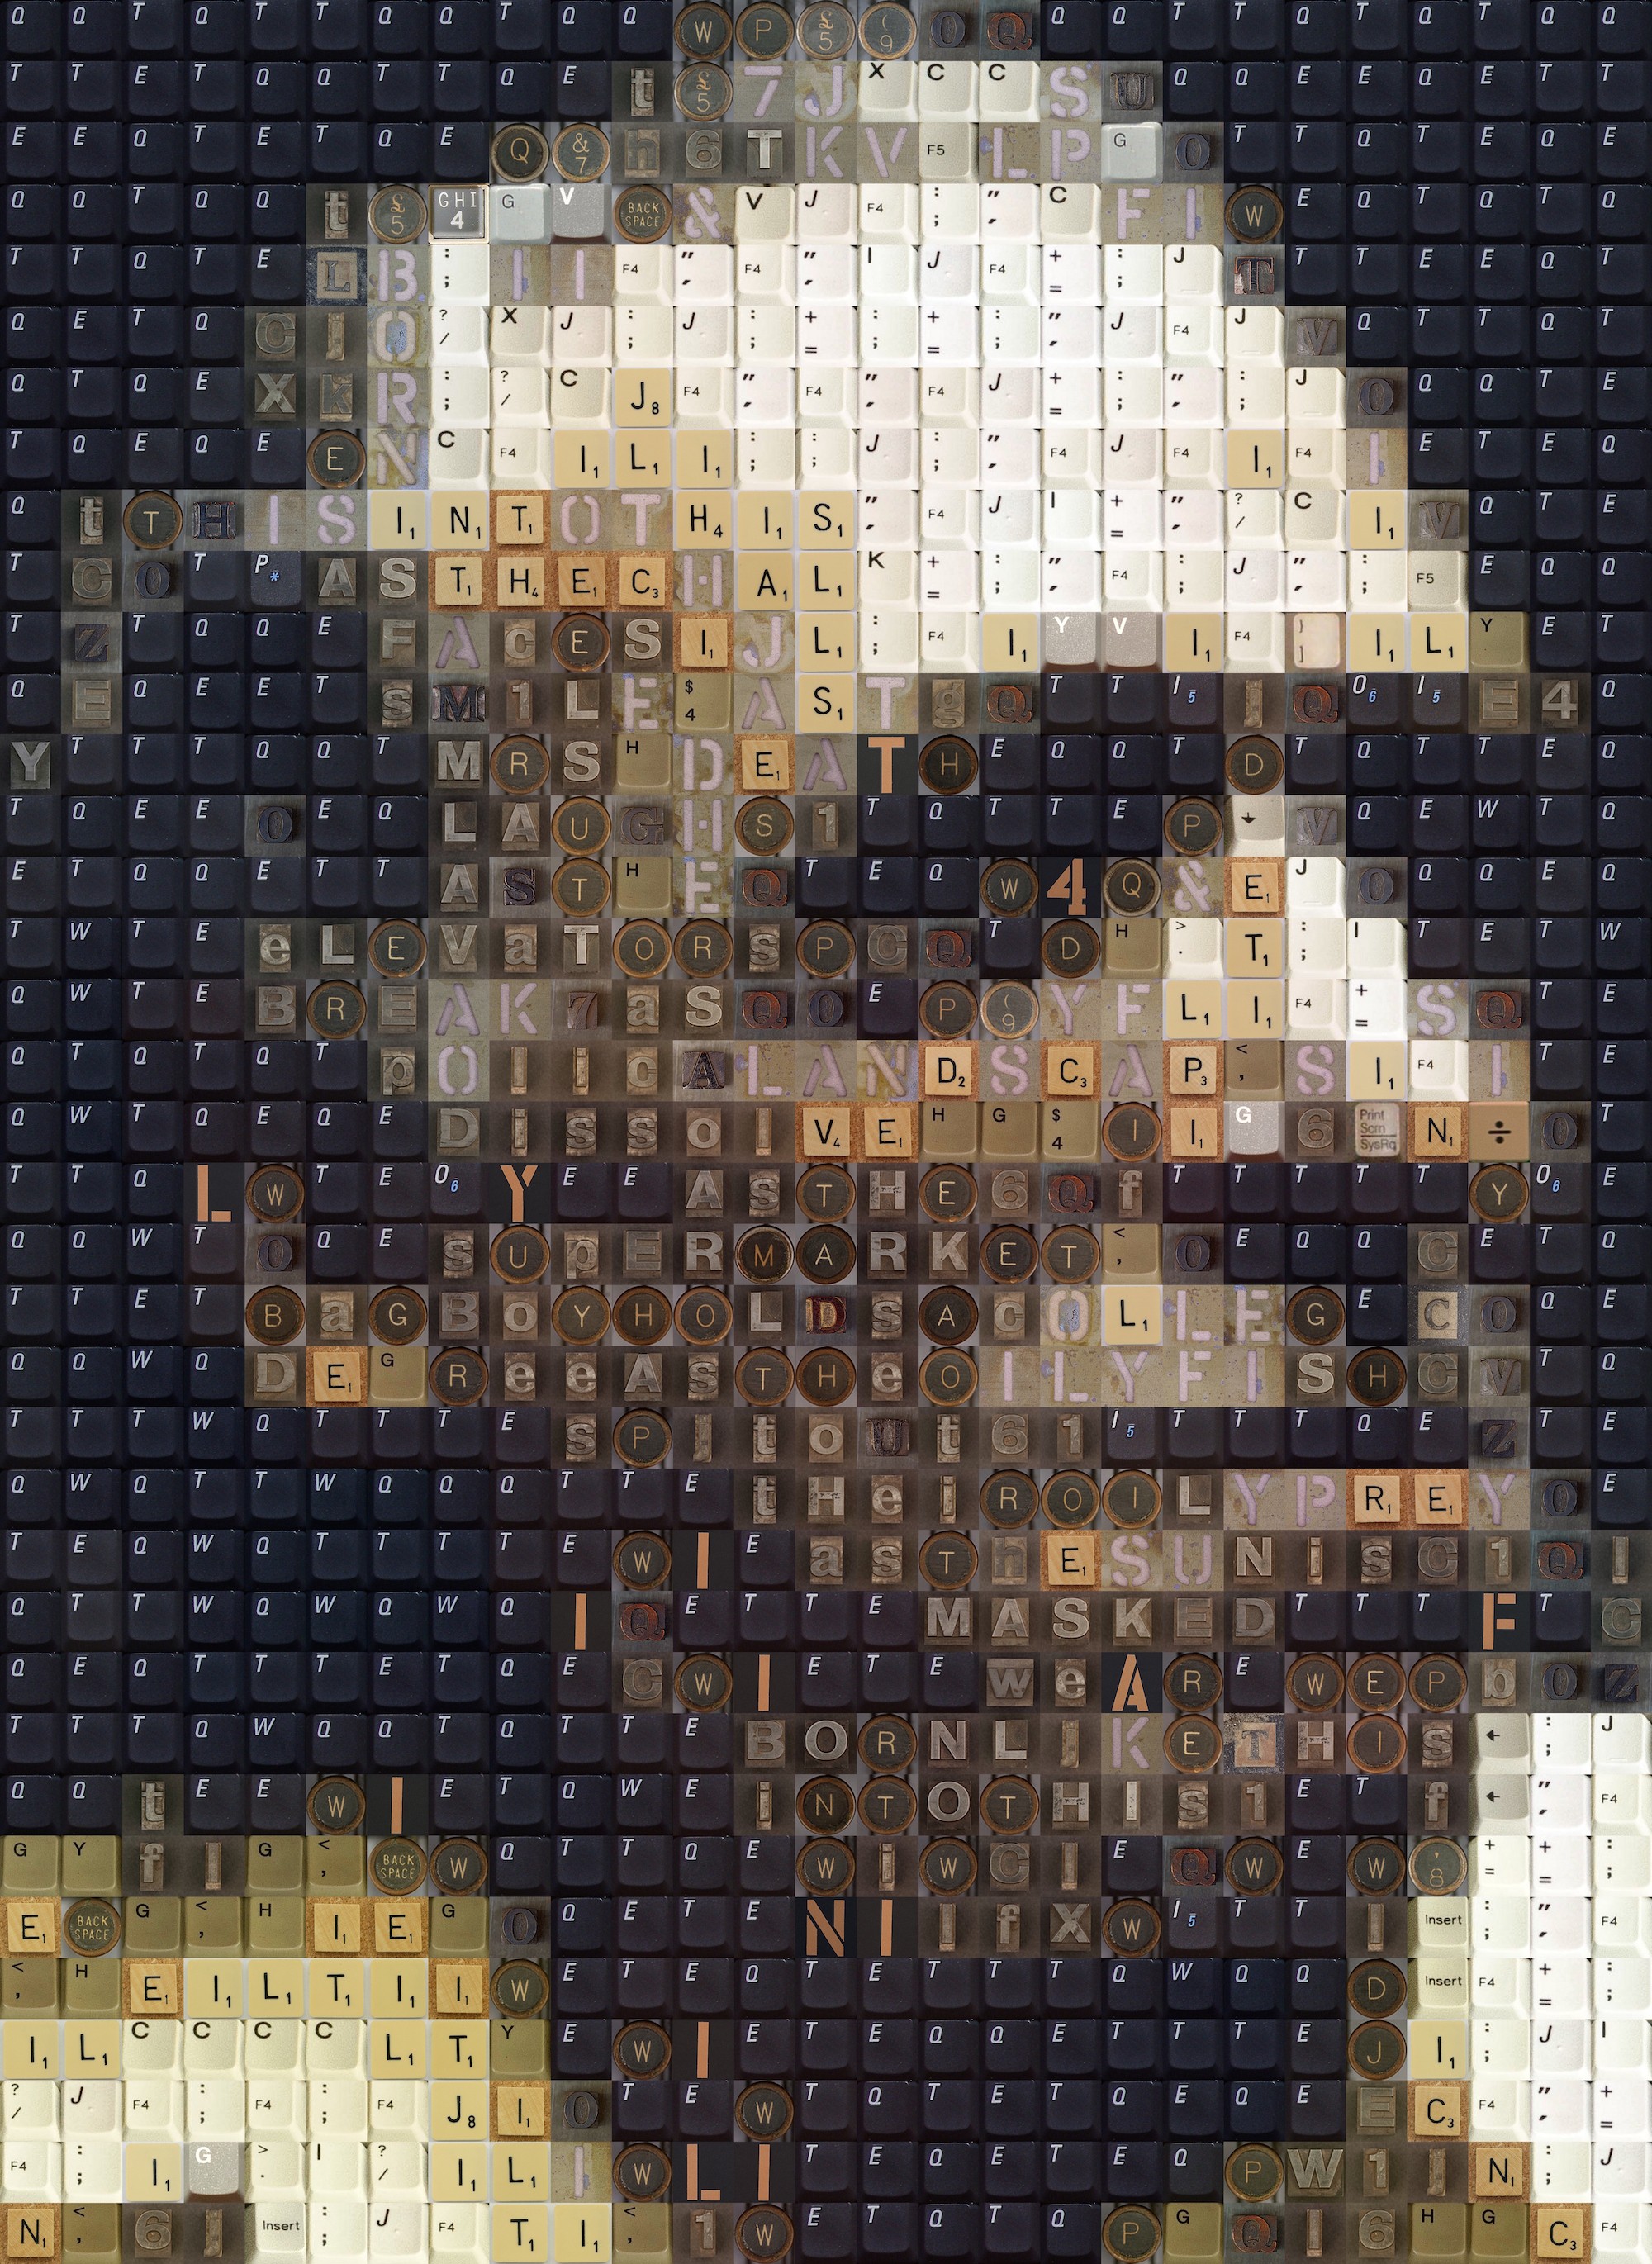 People 2000x2741 men face portrait mosaic Charles Bukowski writers old people keyboards text numbers portrait display artwork creativity